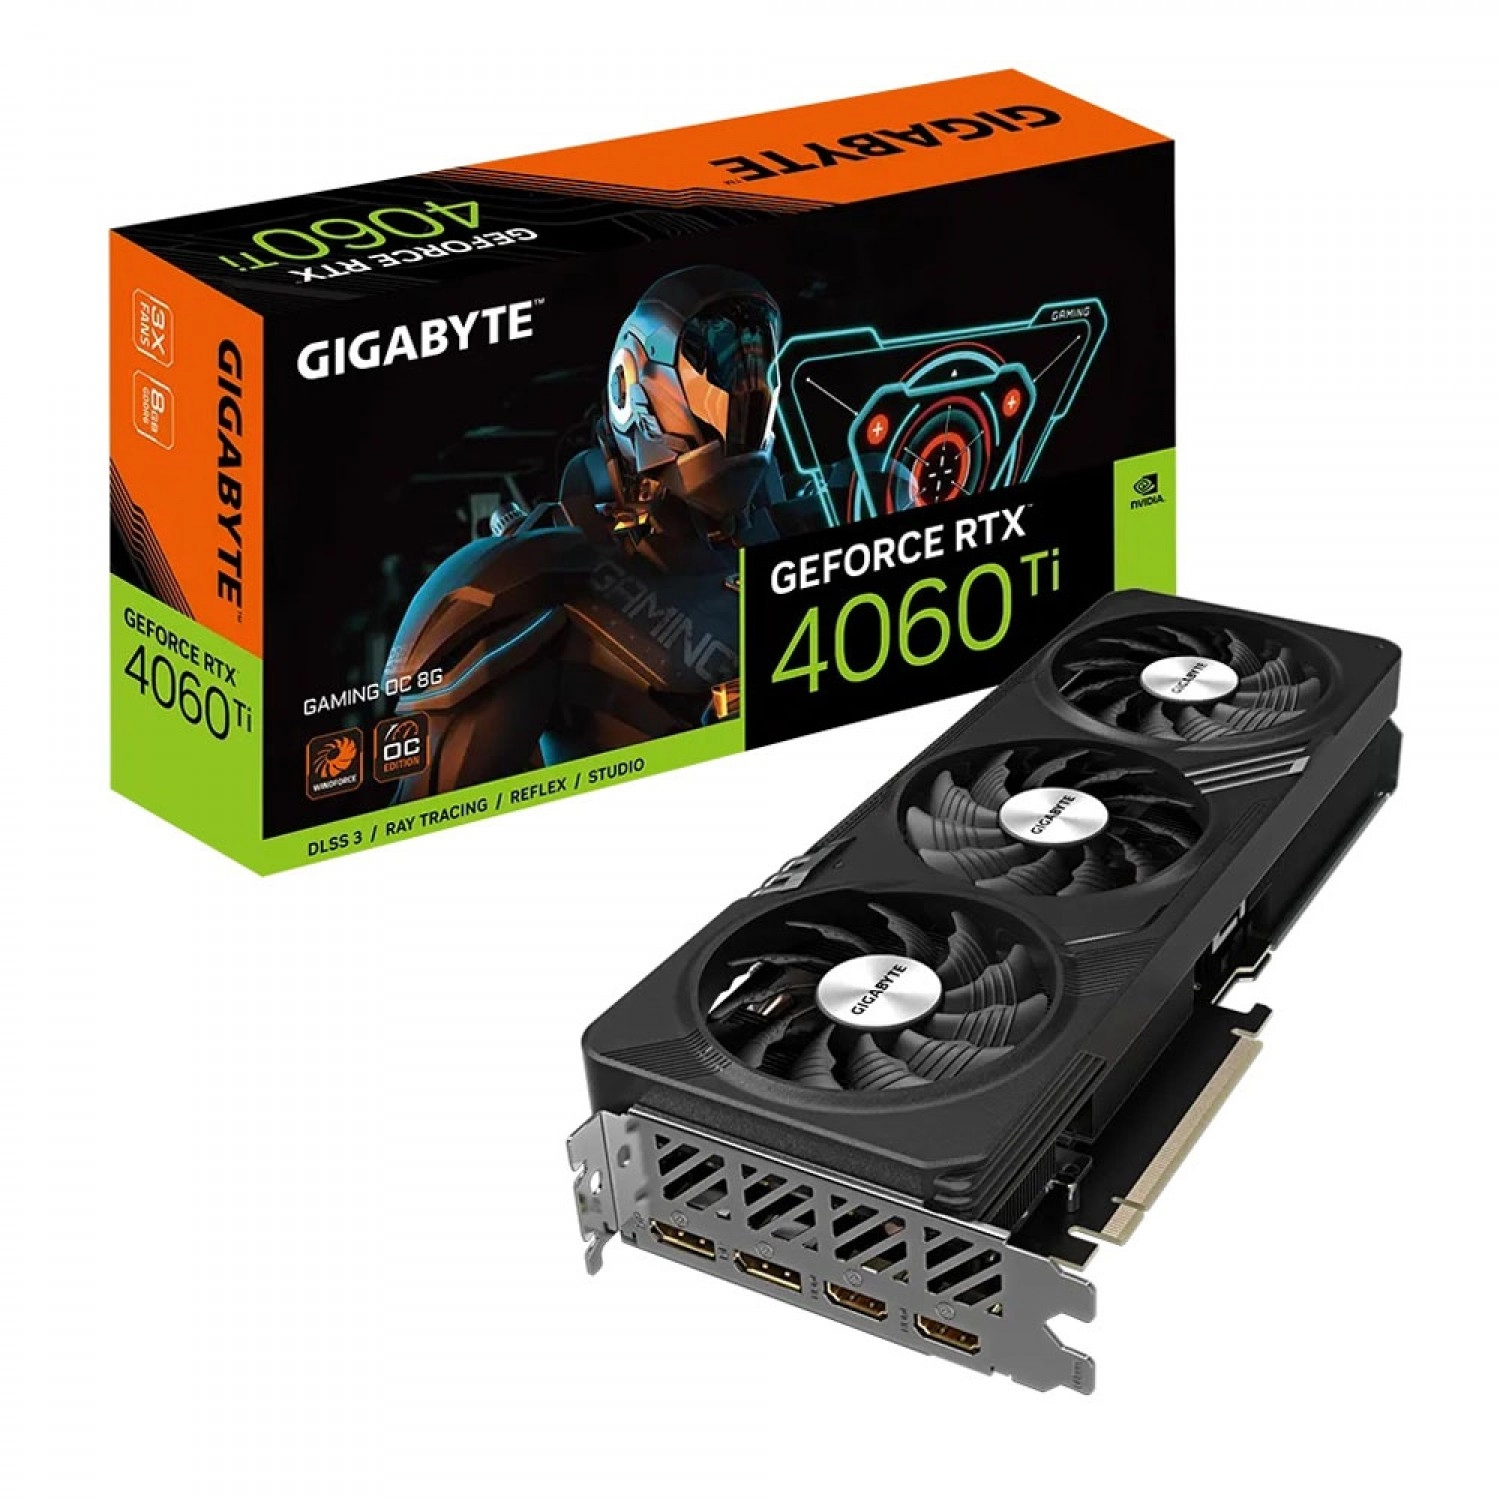 Gigabyte GeForce RTX 4060 Ti Gaming OC 8G Package